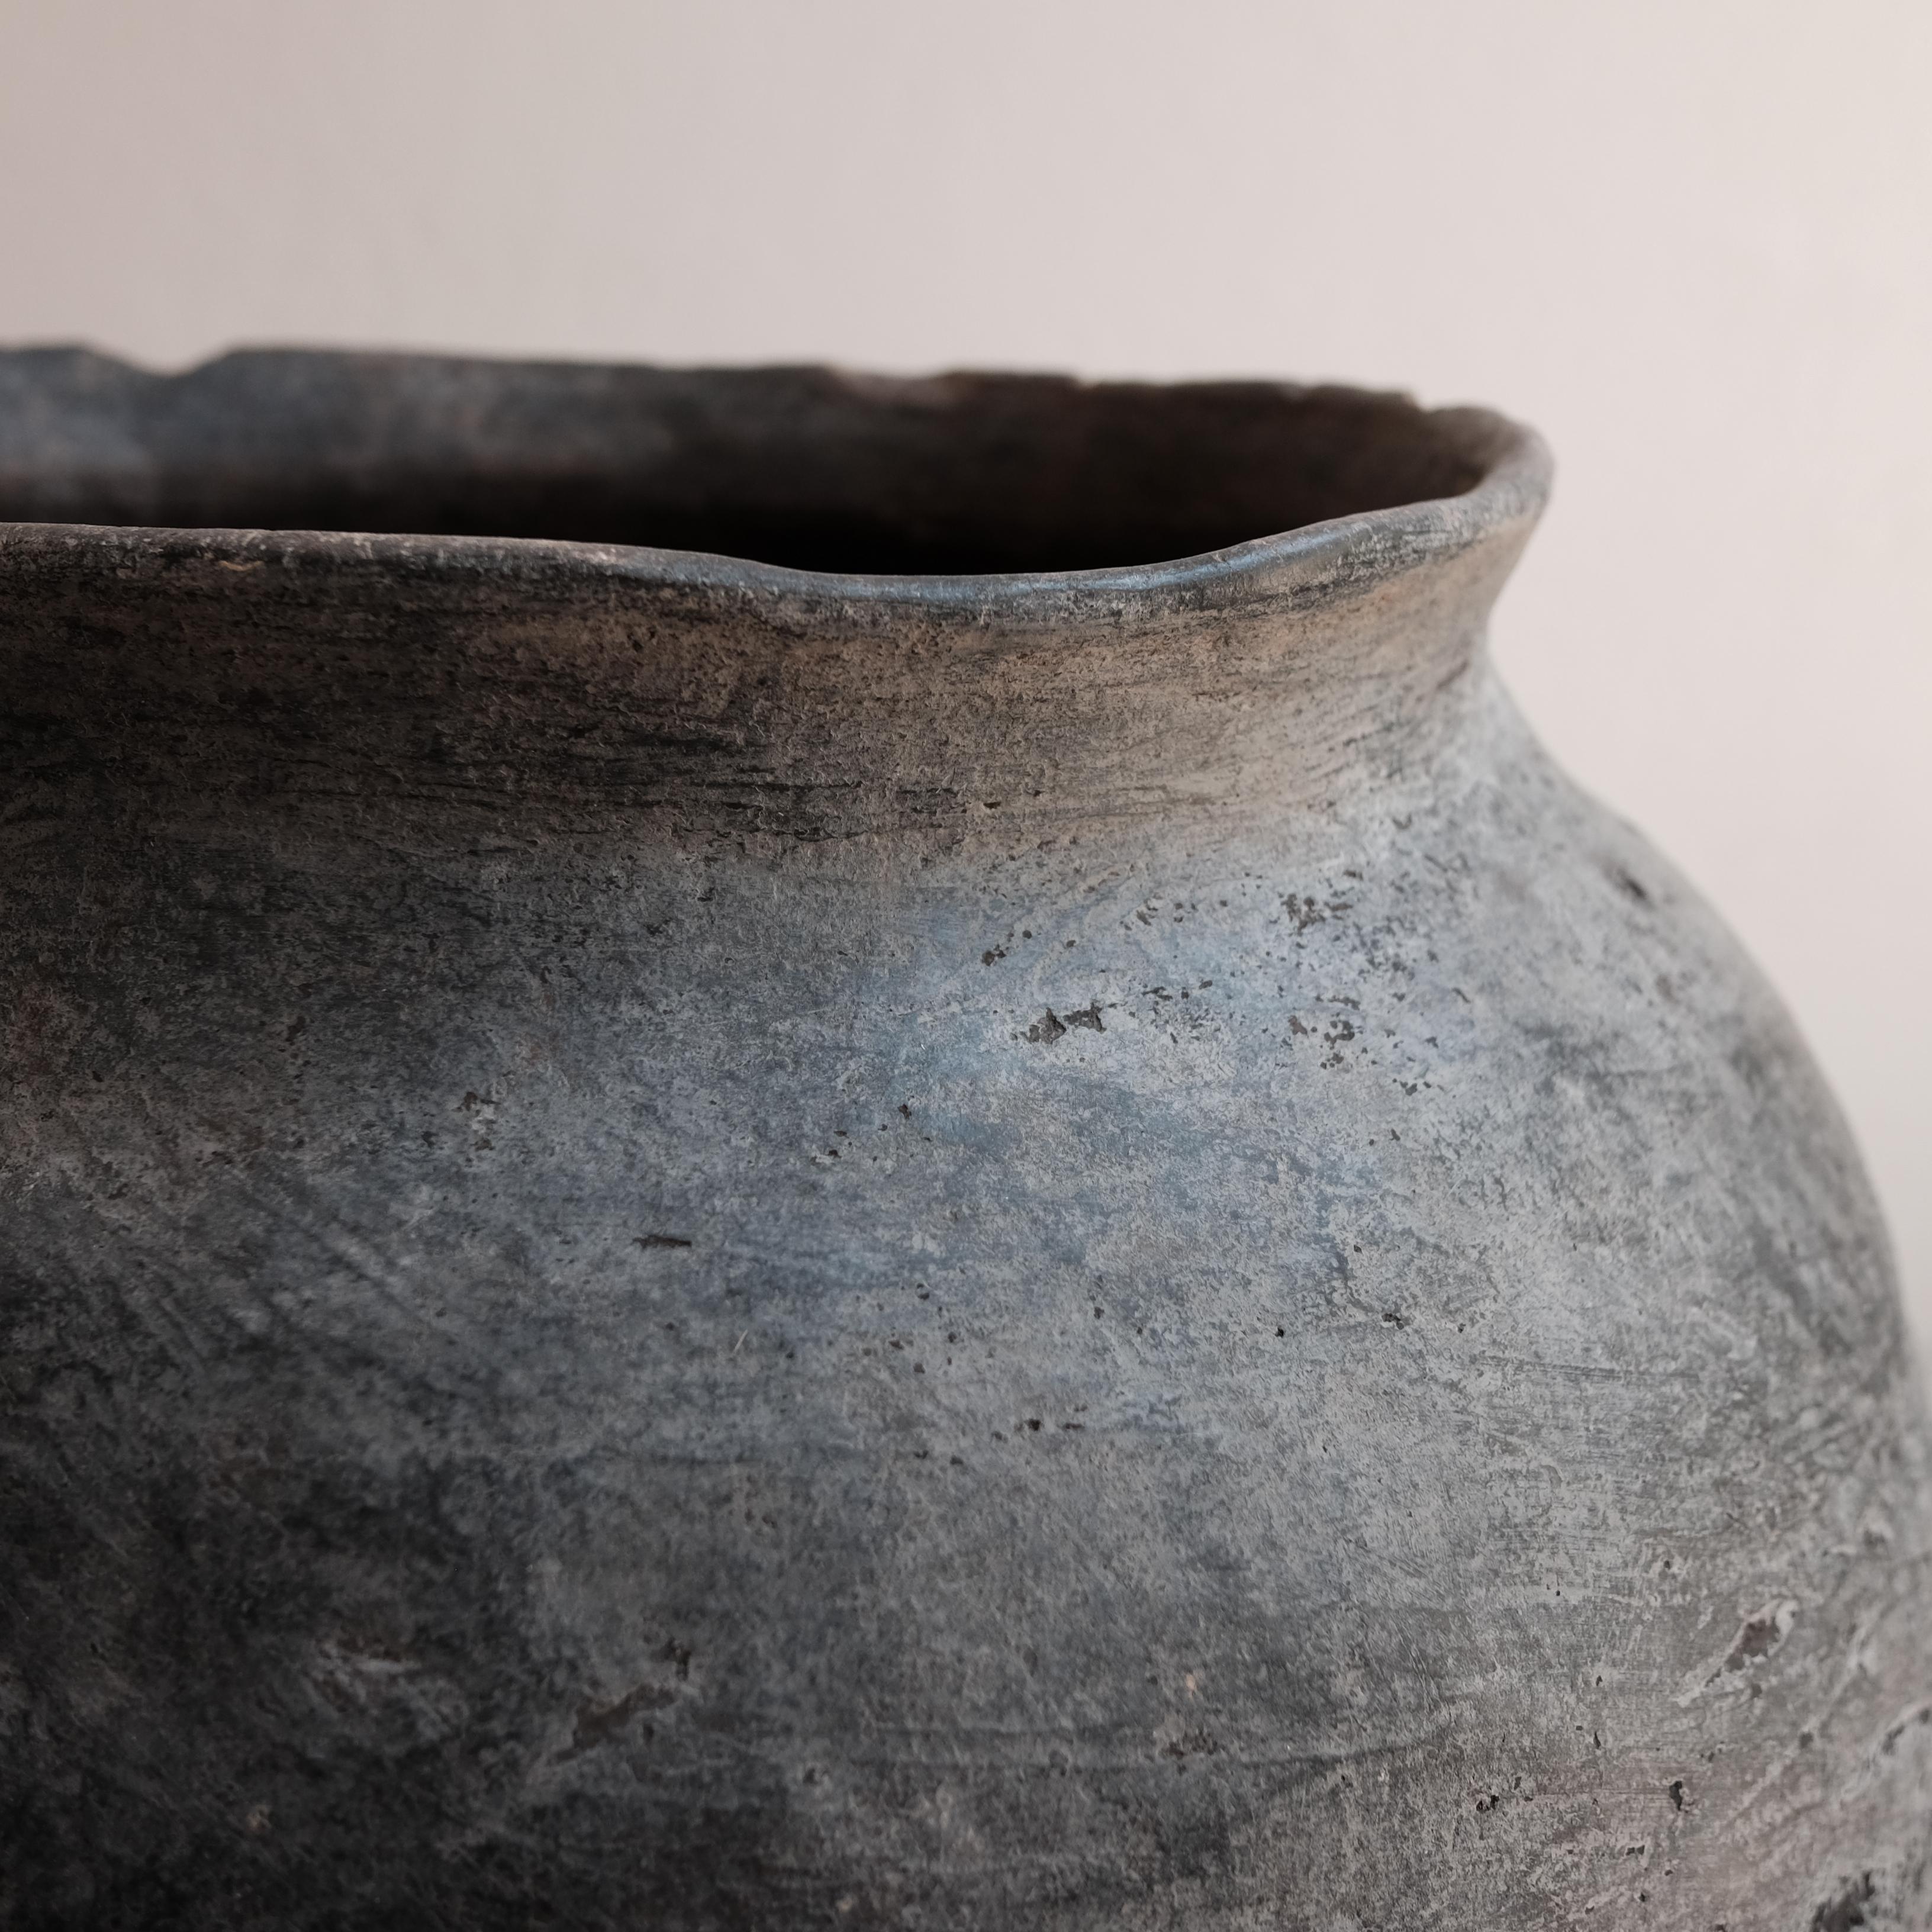 Primitive charcoal colored ceramic jar from San Lorenzo Texmelucan, Oaxaca, Mexico, circa 1940s.